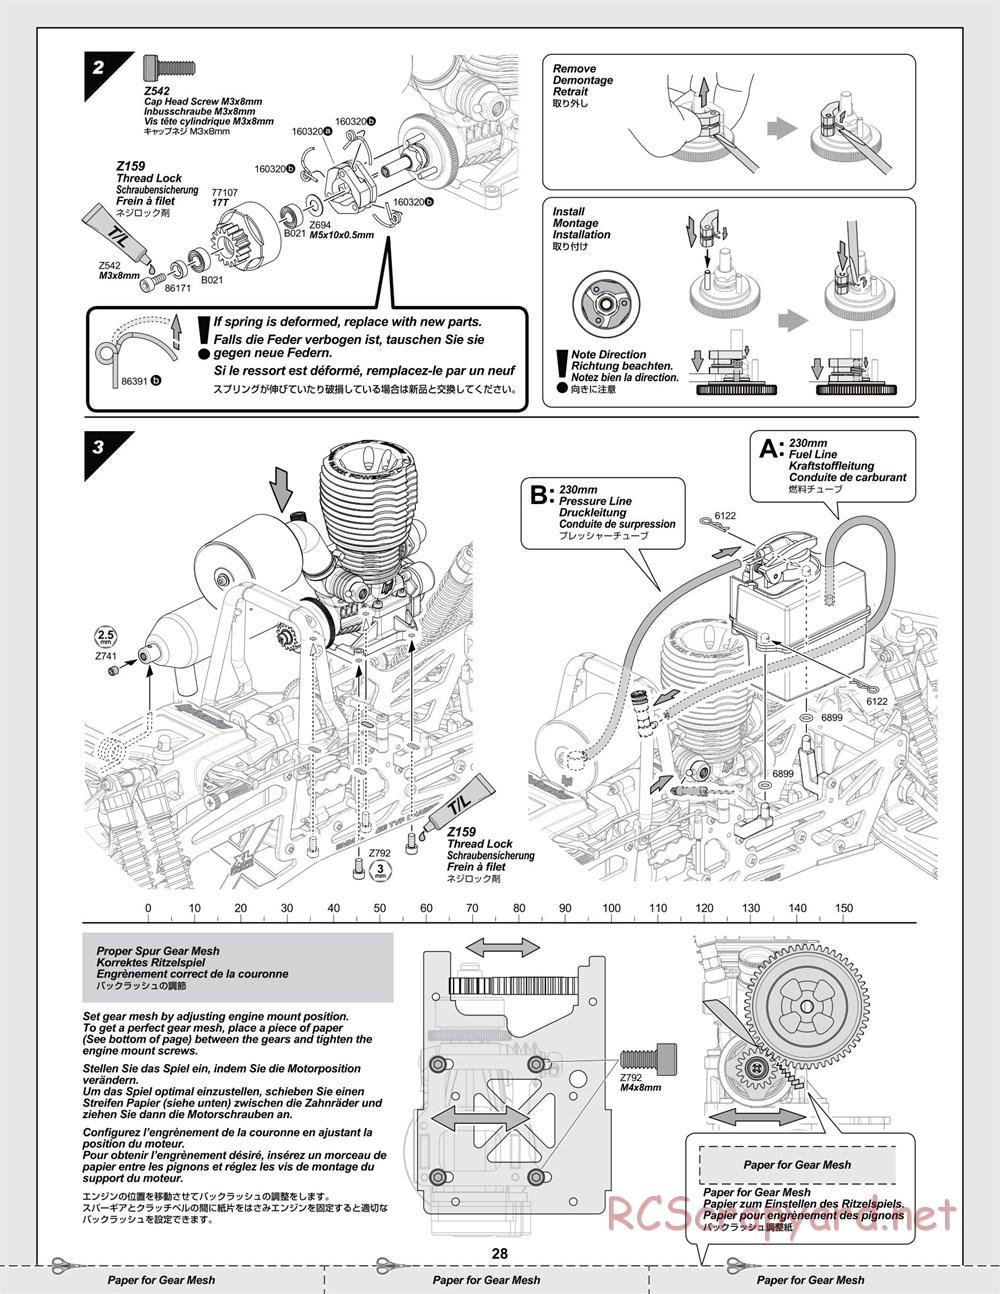 HPI - Savage XL 5.9 - Manual - Page 28